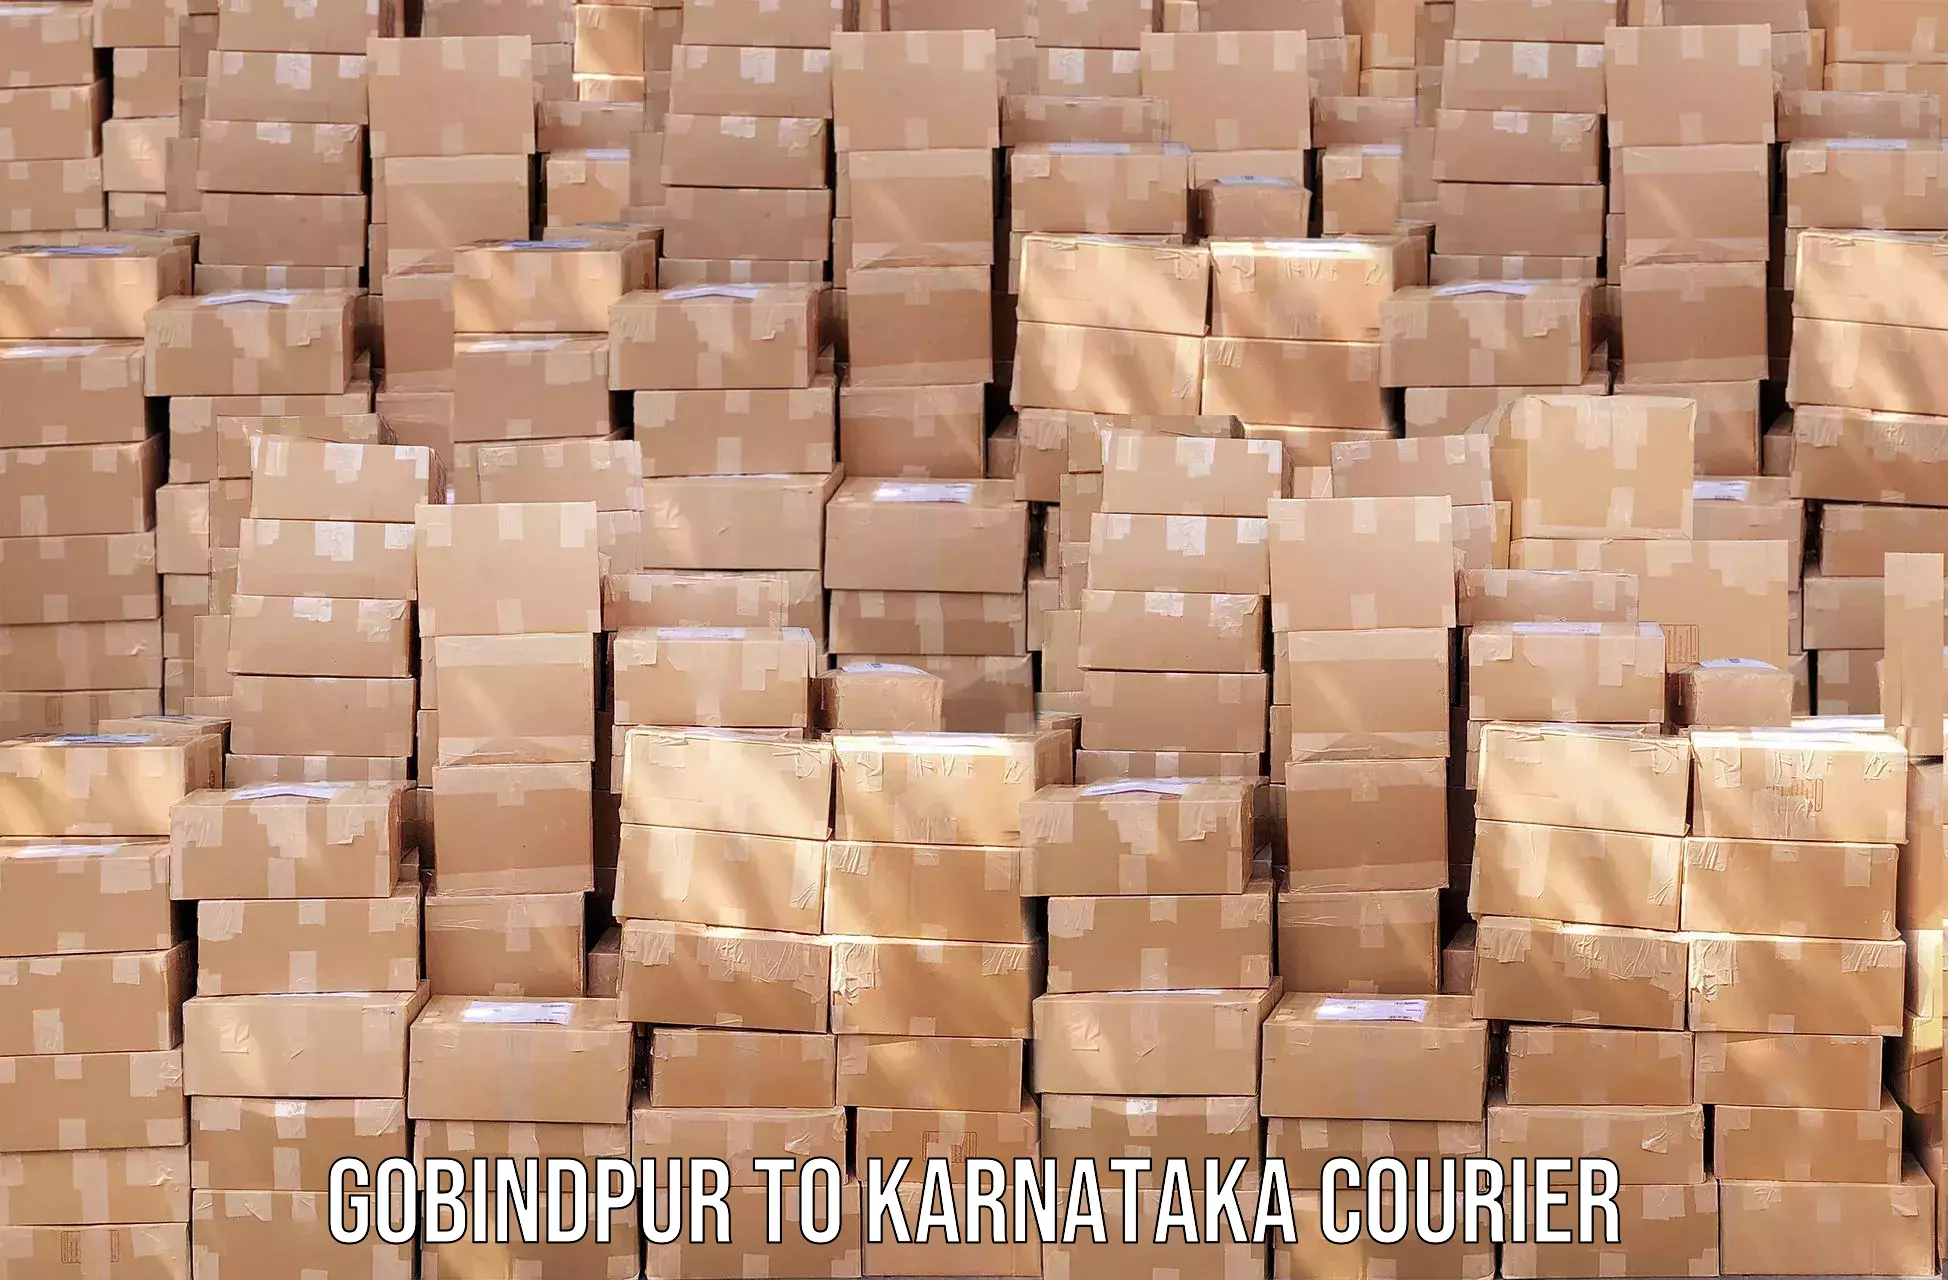 Advanced tracking systems Gobindpur to Karnataka